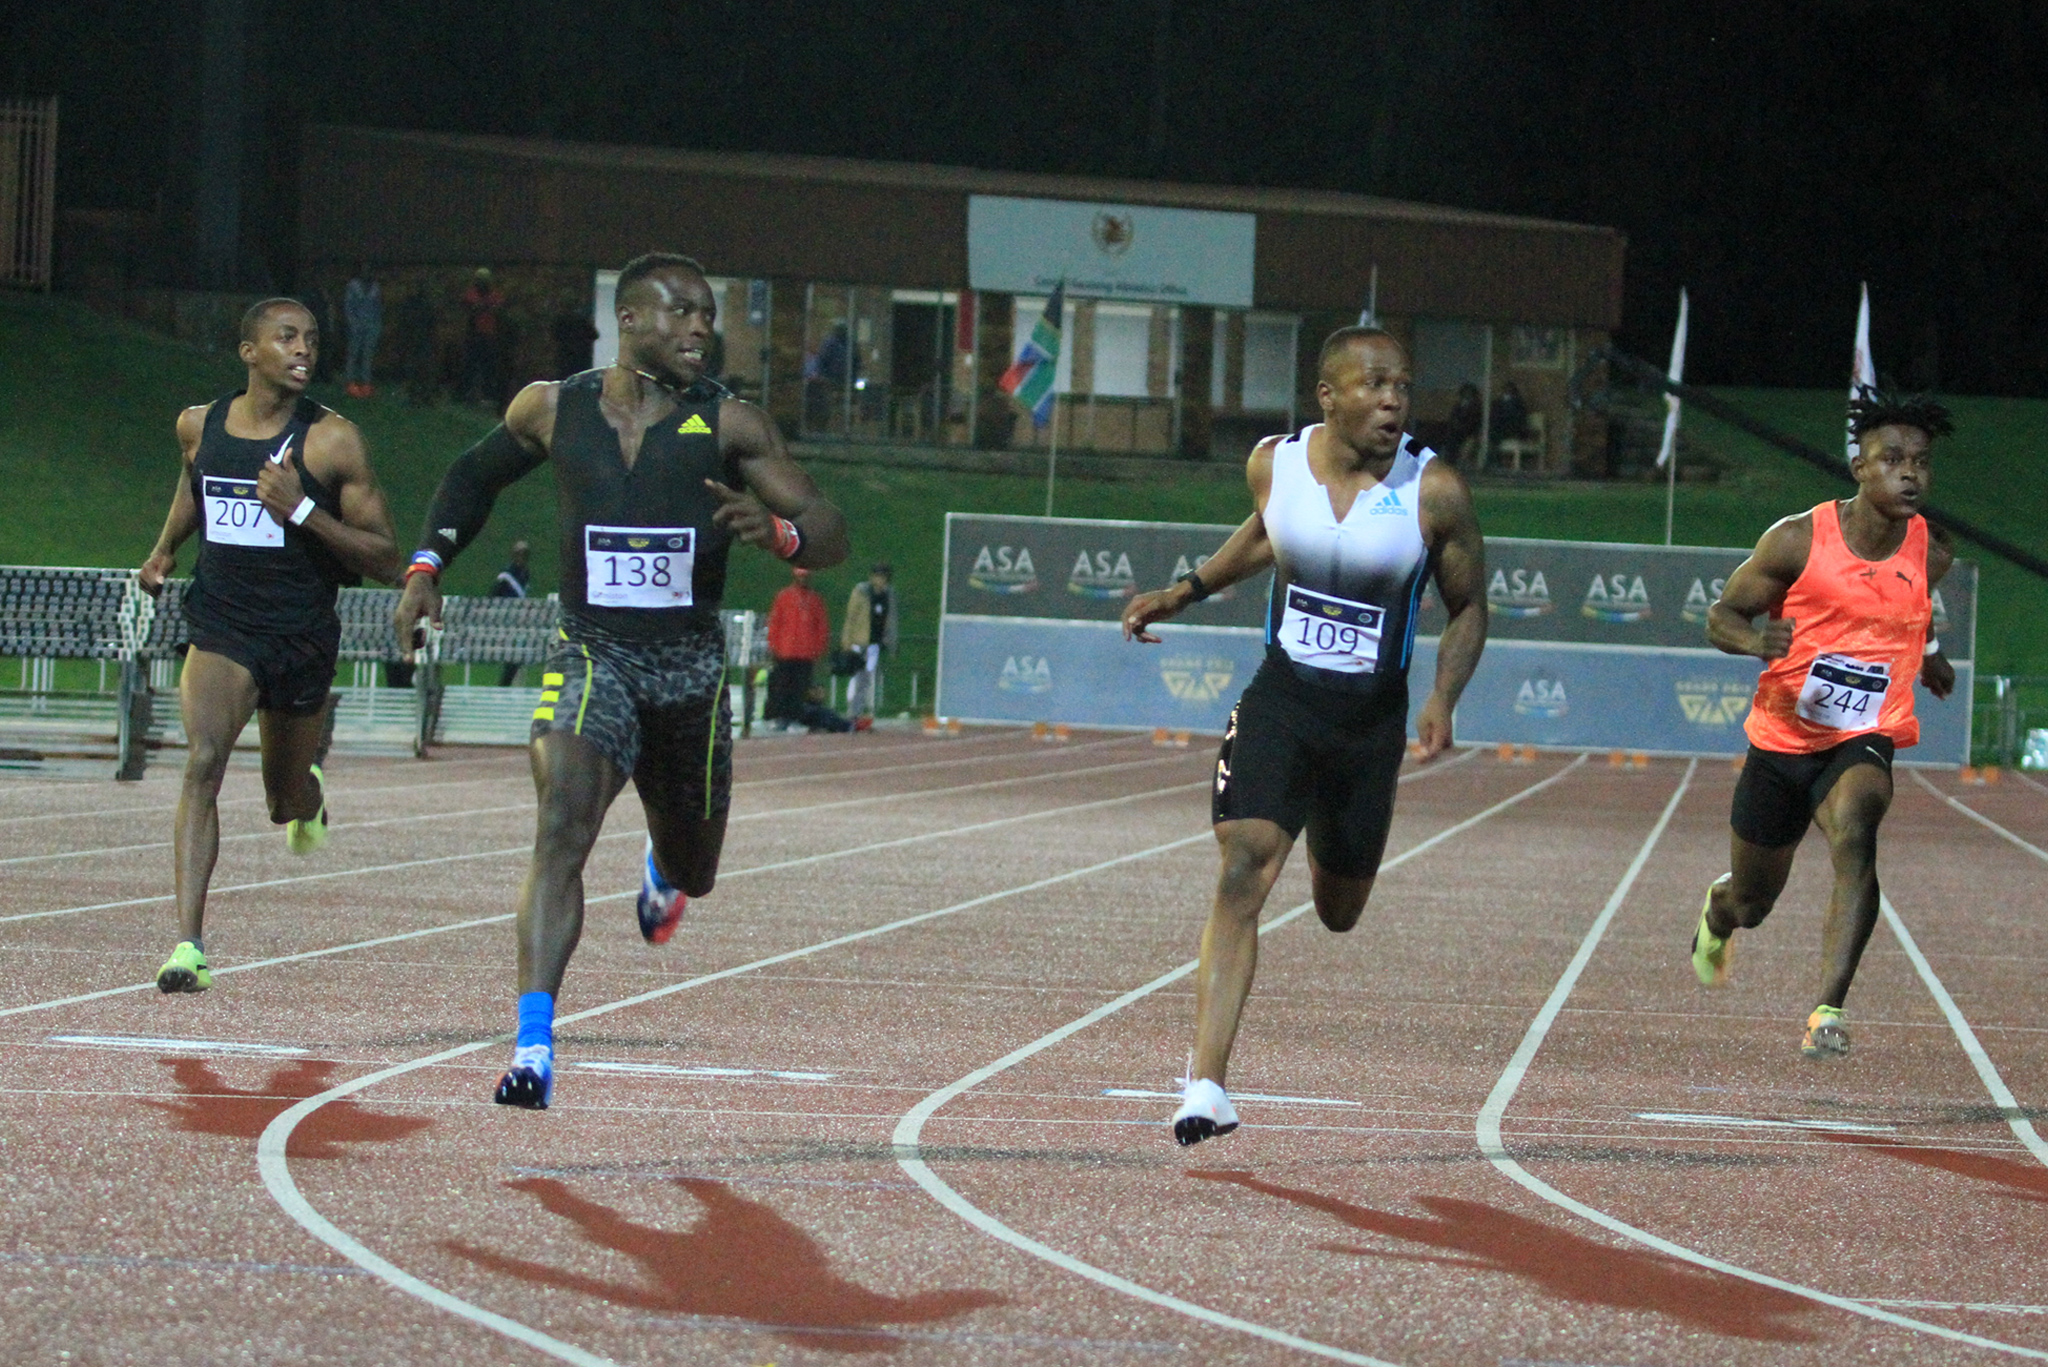 Ferdinand Omanyala outrunning Akani Simbine in a 100m showdown between Africa’s fastest male sprinters at the 4th leg of the ASA Athletics Grand Prix Series at the Germiston Athletics Stadium / Photo credit: Tladi Khuele